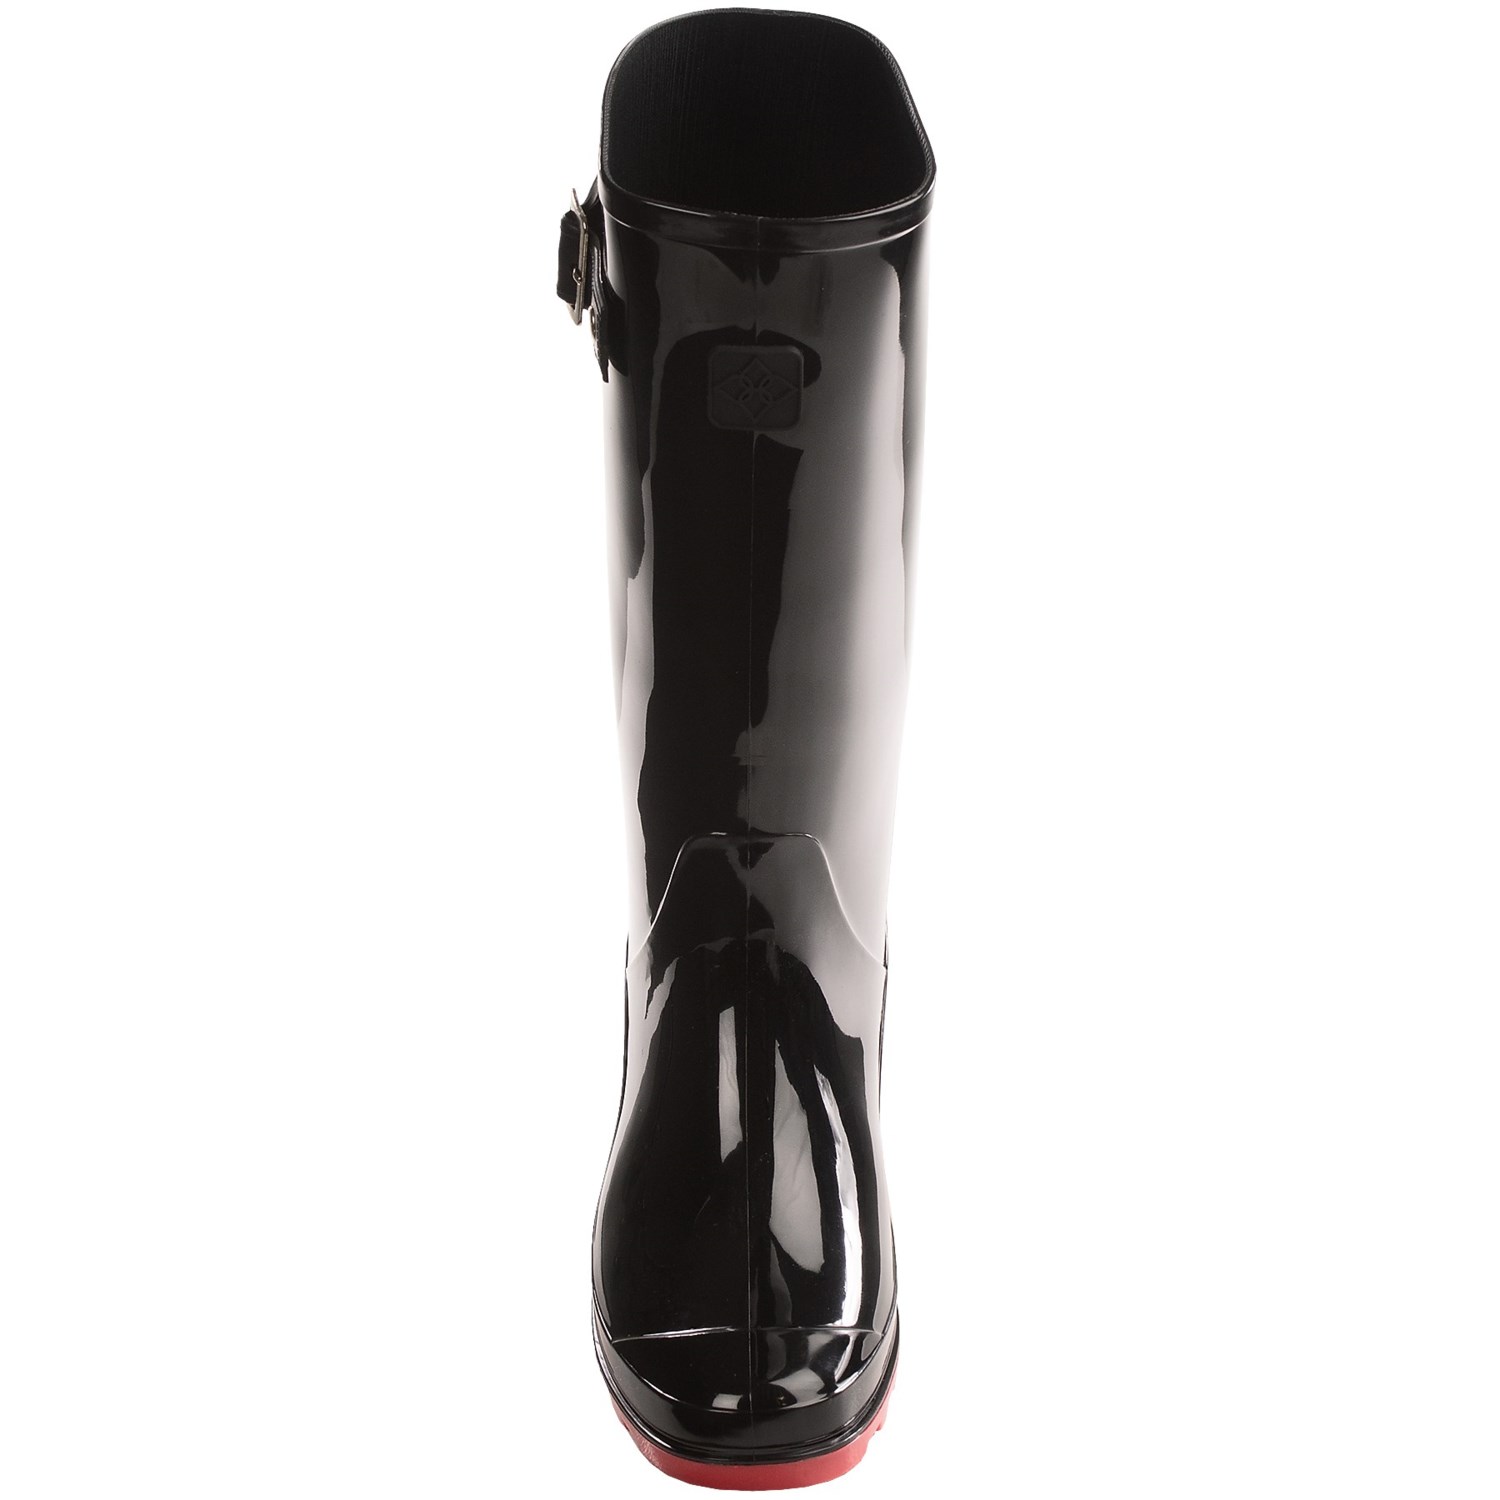 Dav Jelly Lug Buckle Rain Boots (For Women) 8170R - Save 53%